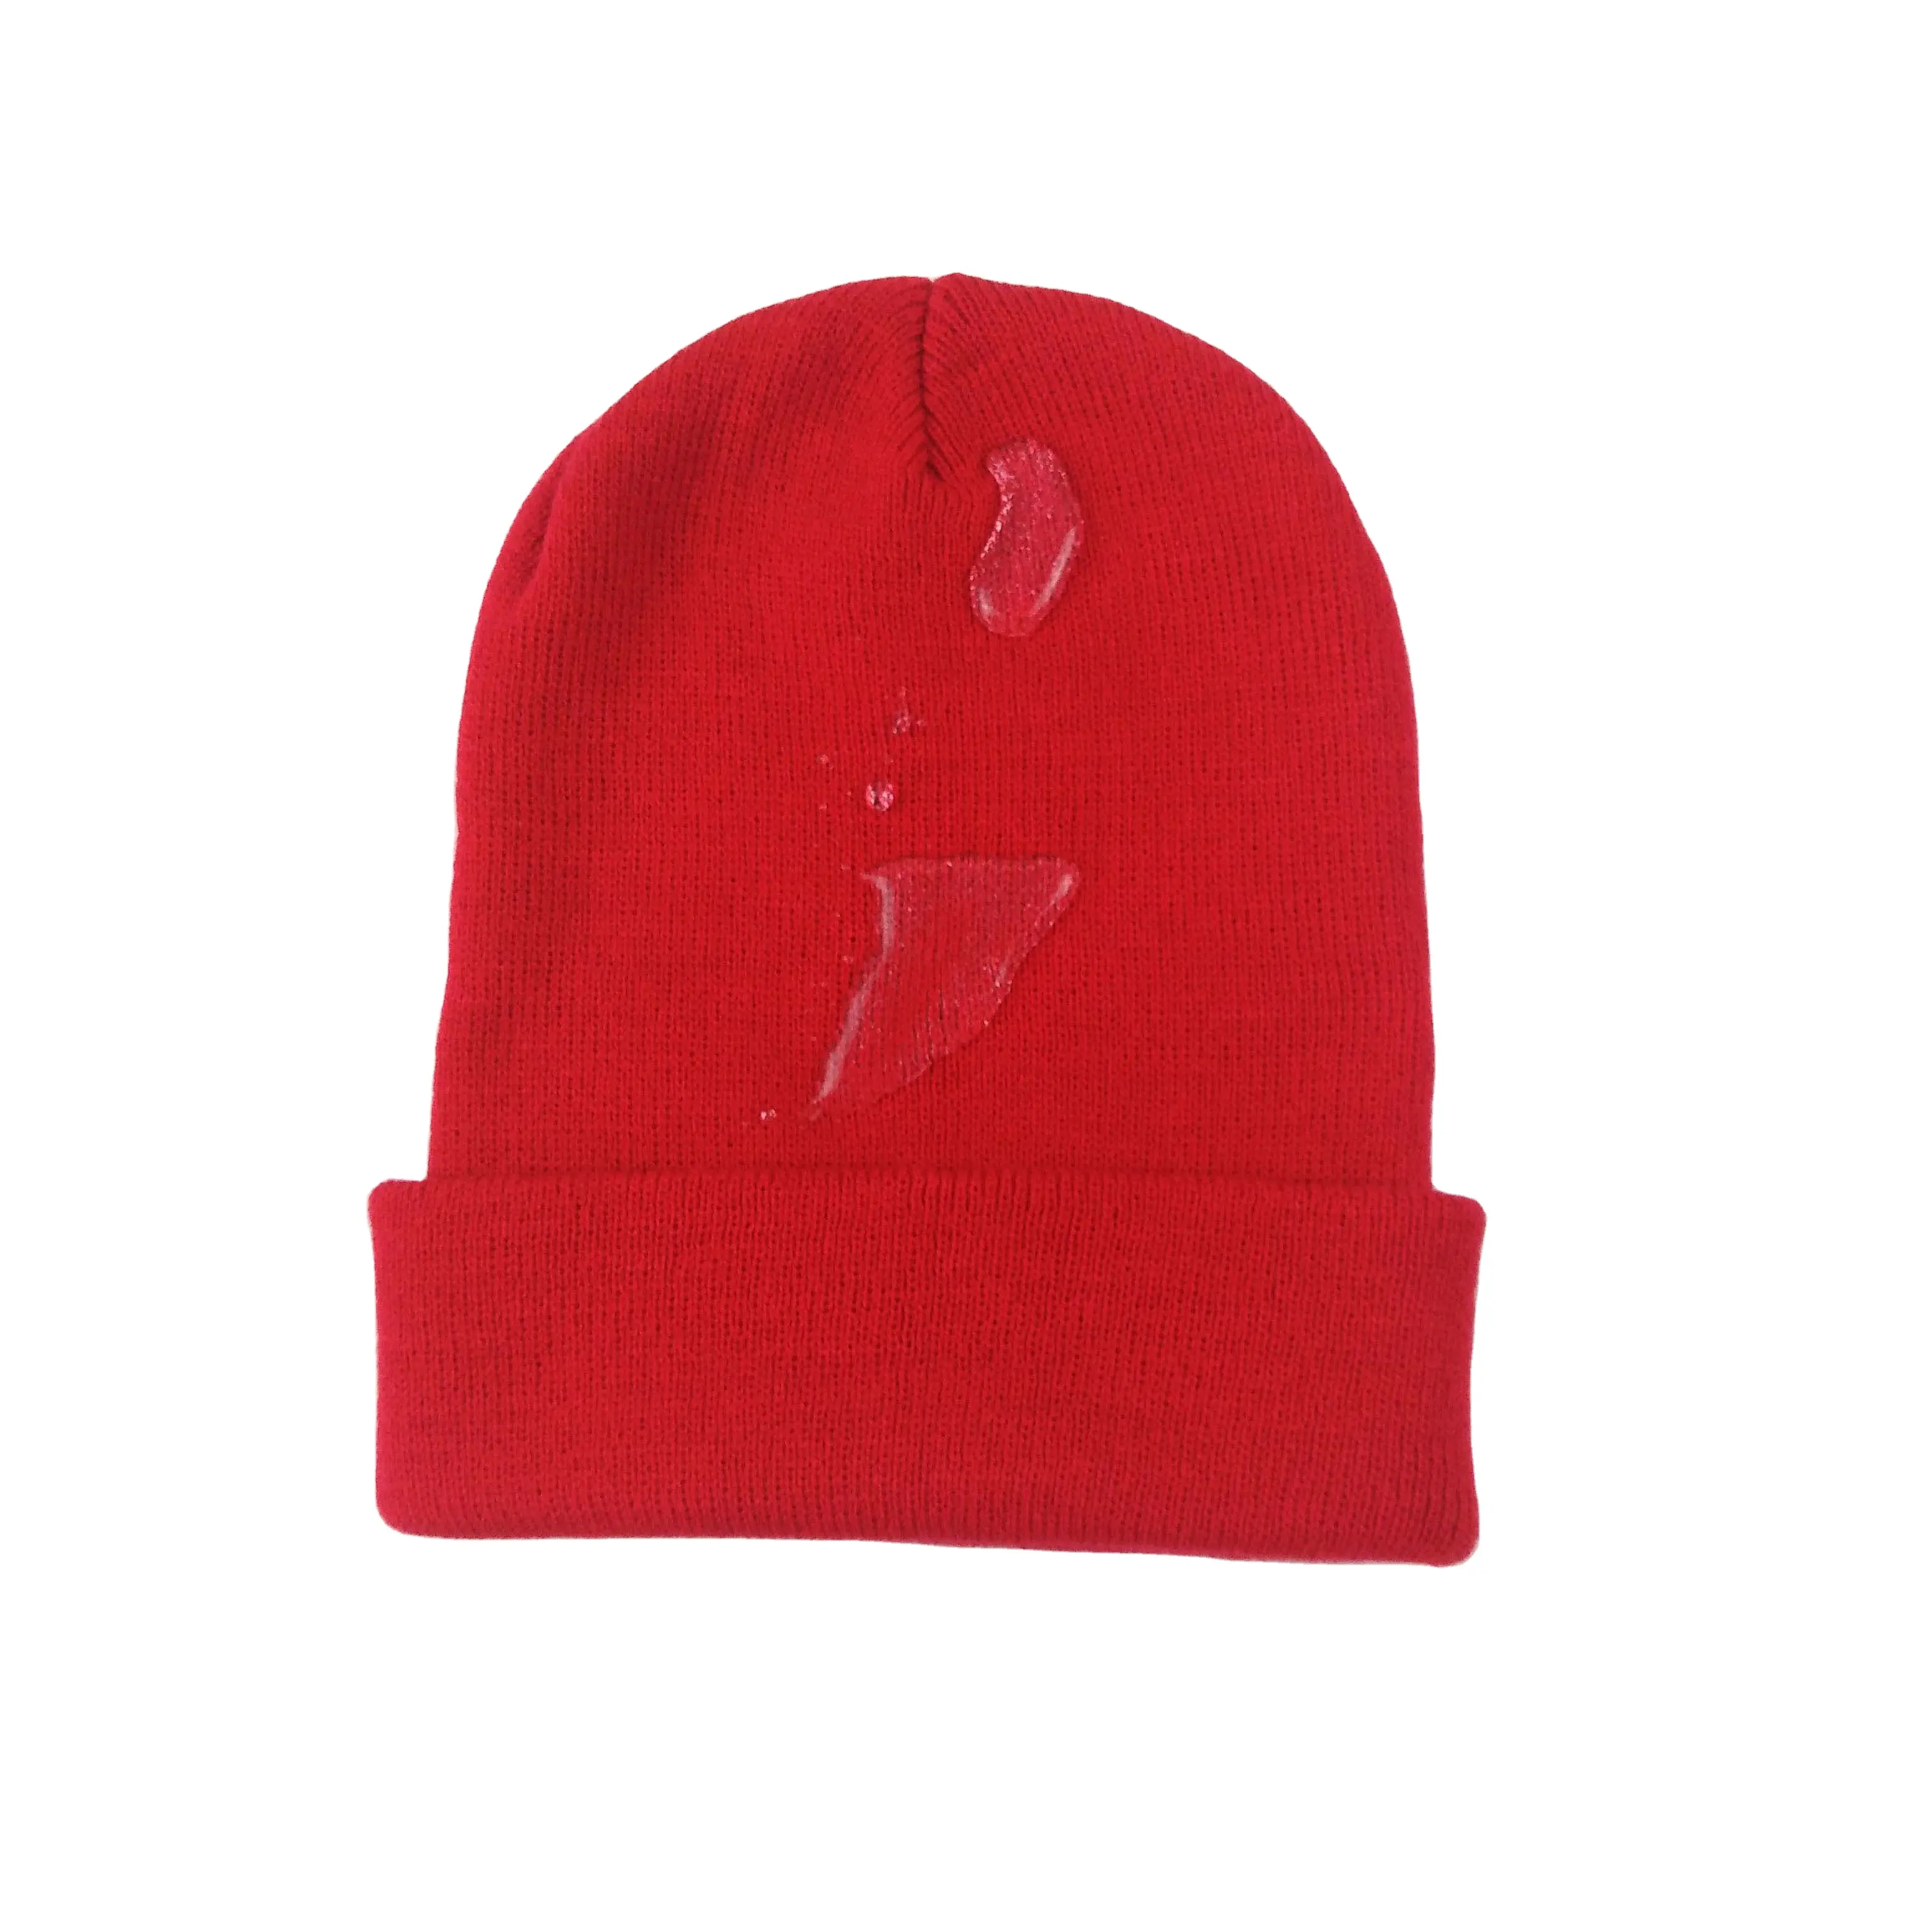 Los hombres de promoción frío clima de lluvia impermeable sombrero con micro-forro polar con logotipo personalizado